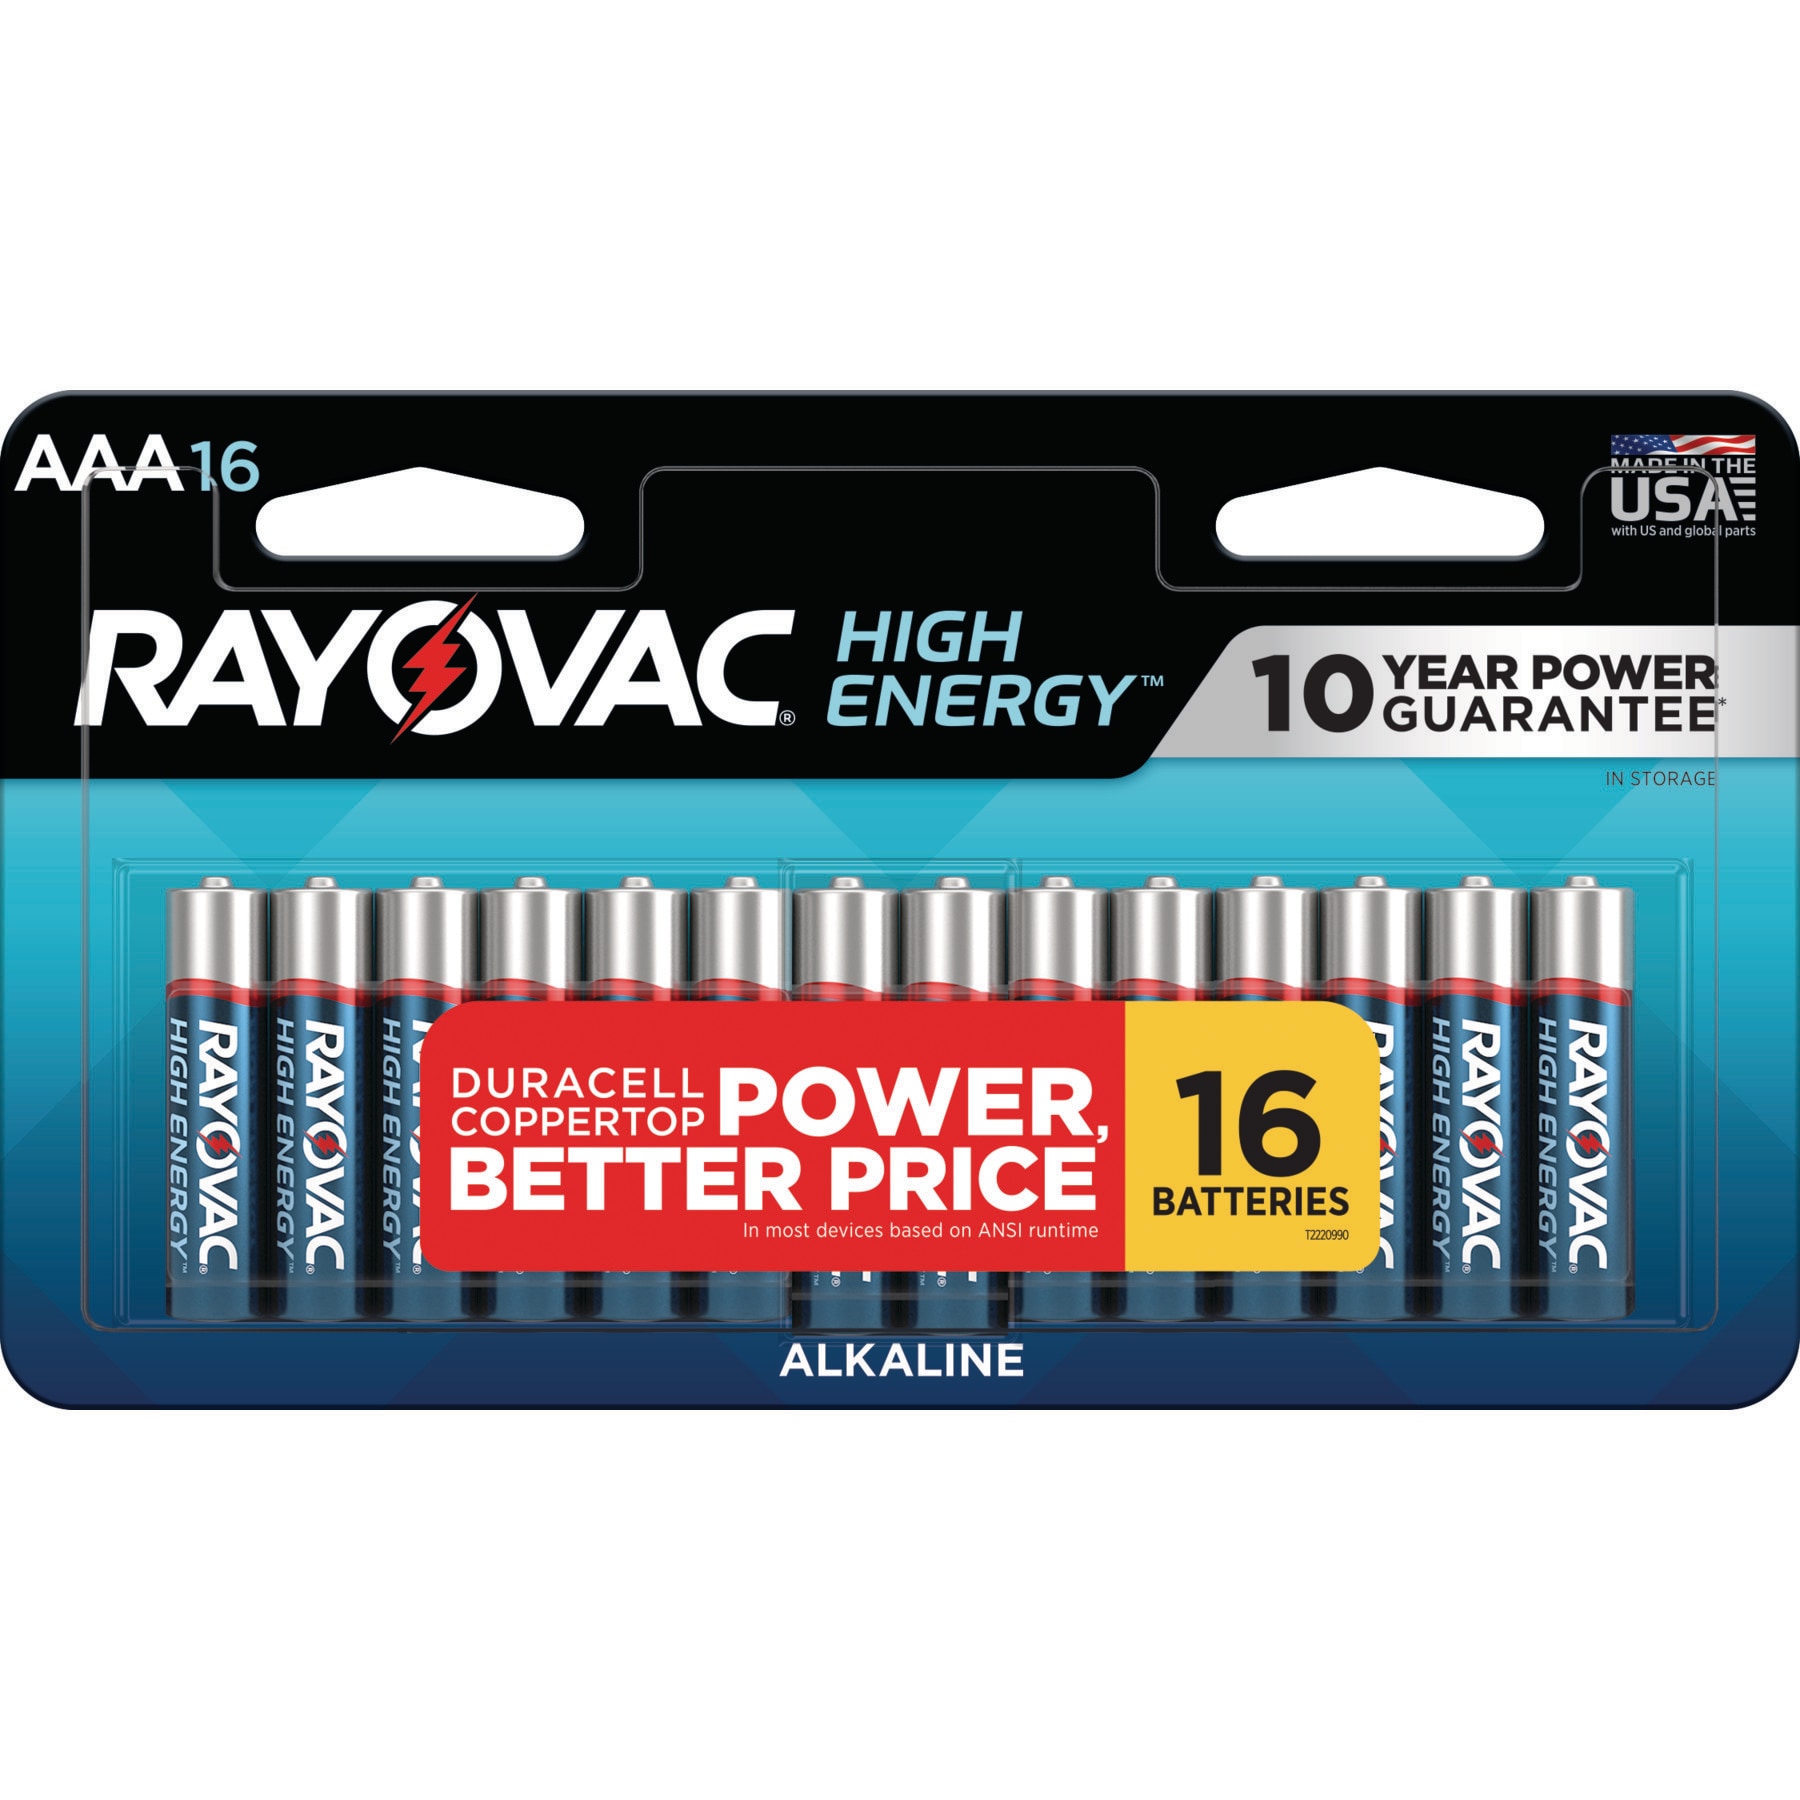 Rayovac Alkaline AAA Batteries (16-Pack) in the AAA Batteries